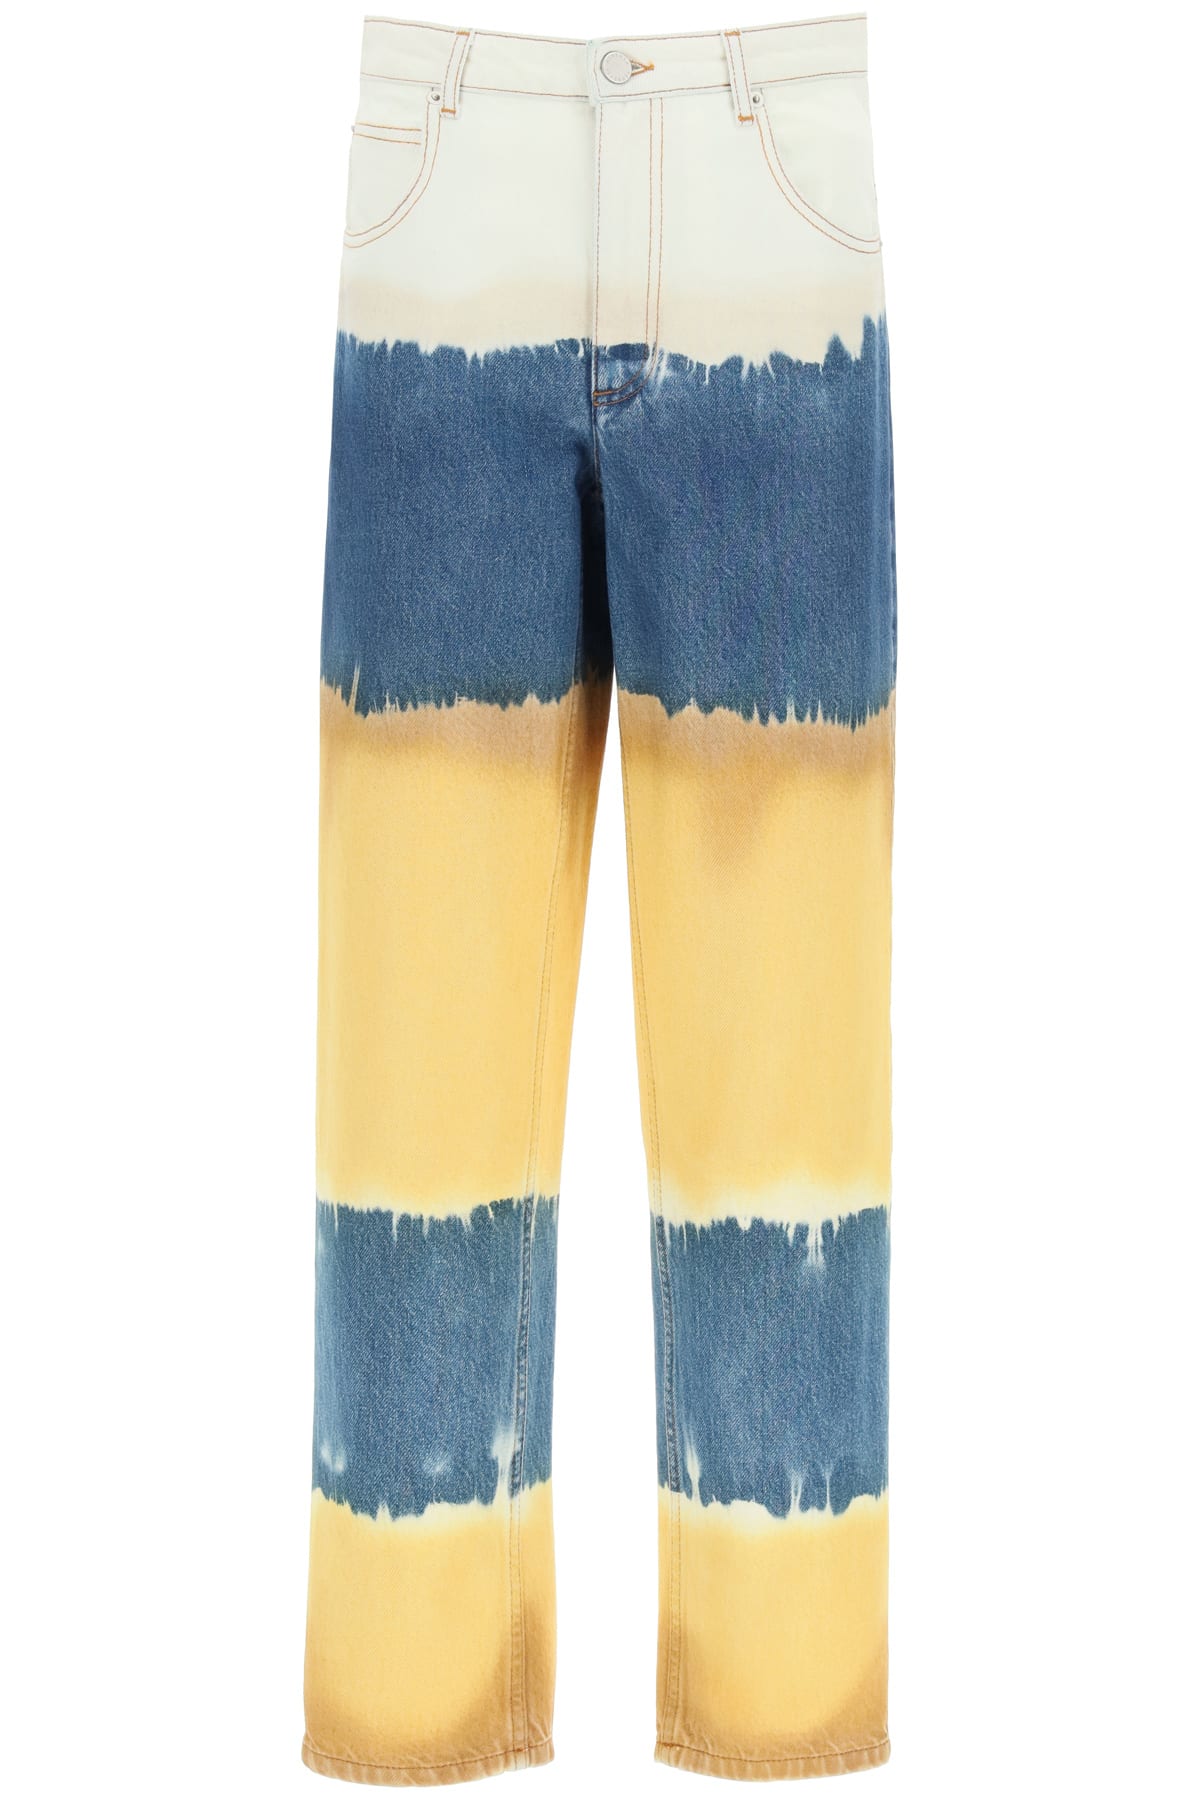 Alberta Ferretti Tie-dye I Love Summer Trousers